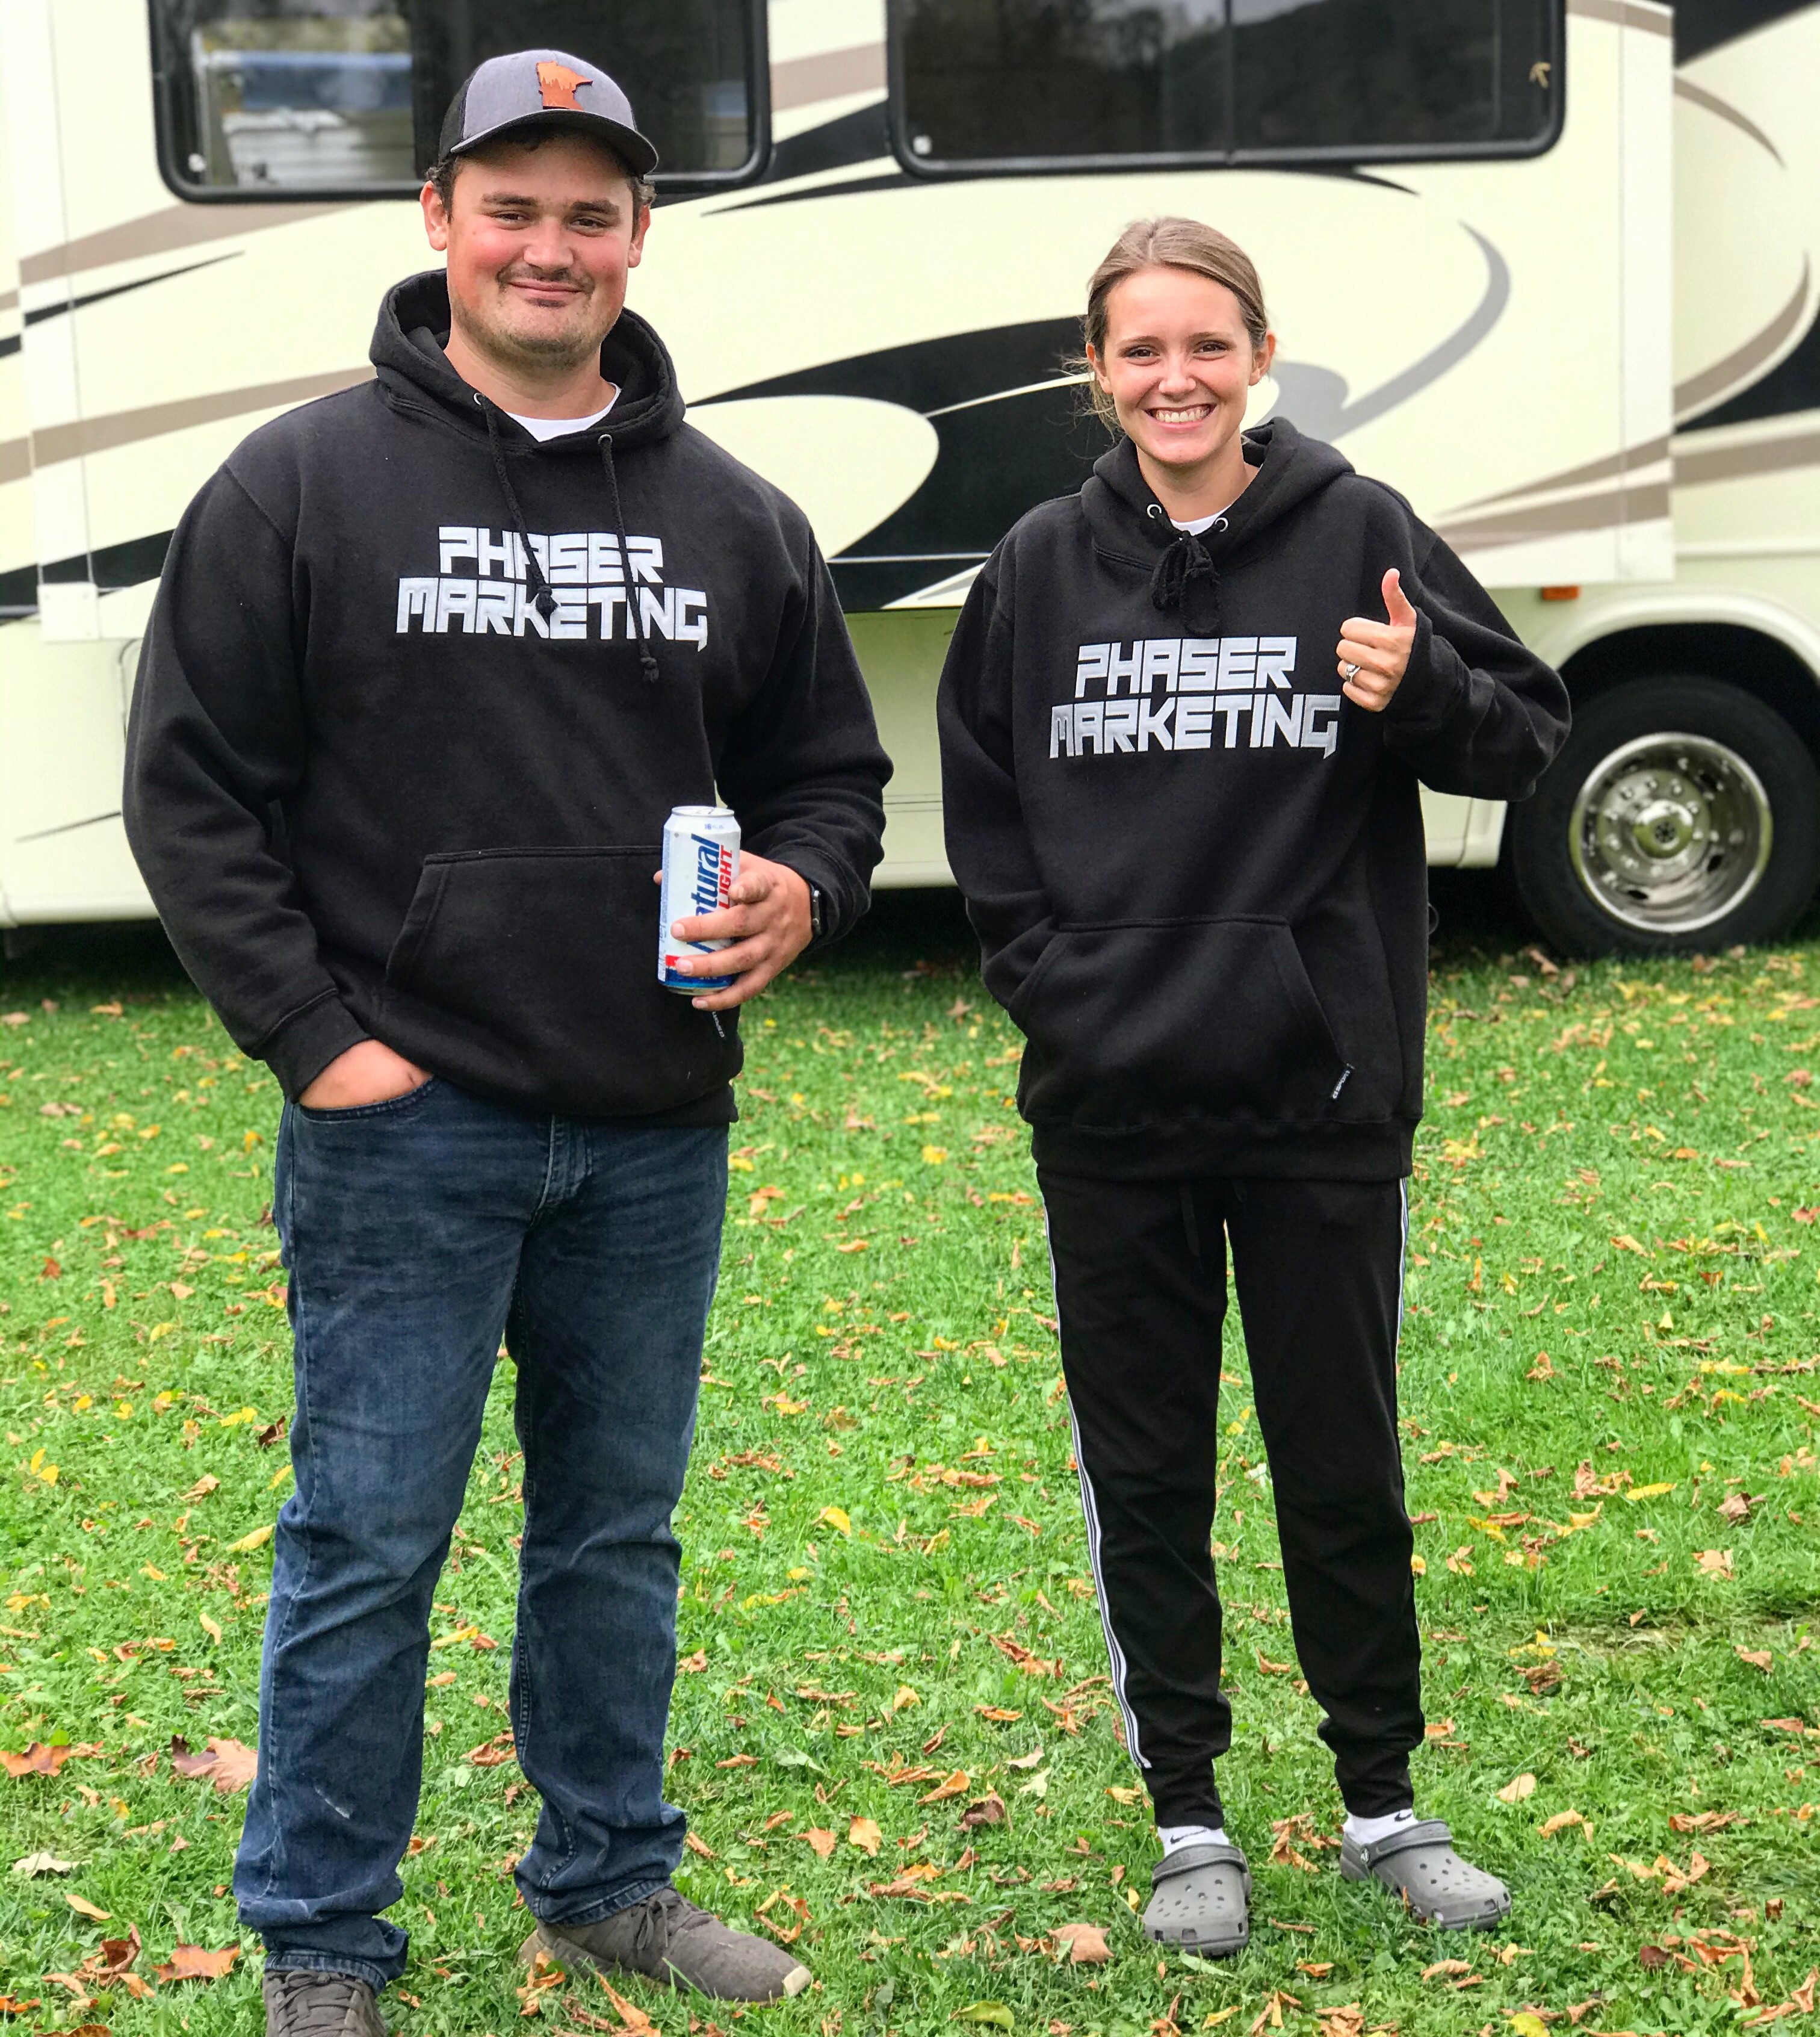 Dylan and Jena wearing their black phaser marketing sweatshirts